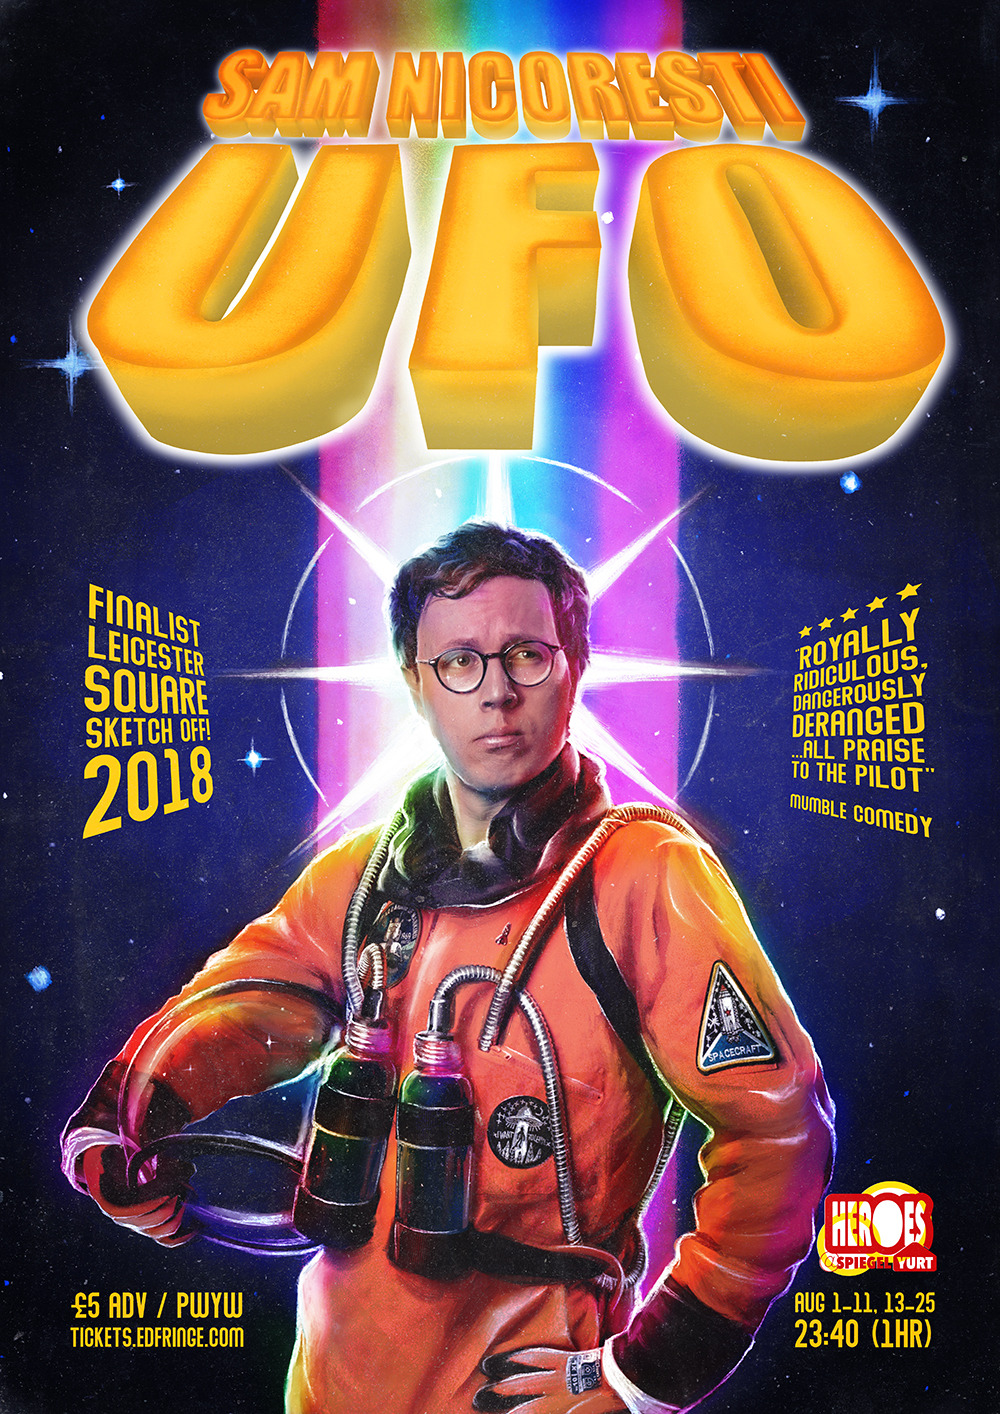 The poster for Sam Nicoresti: UFO